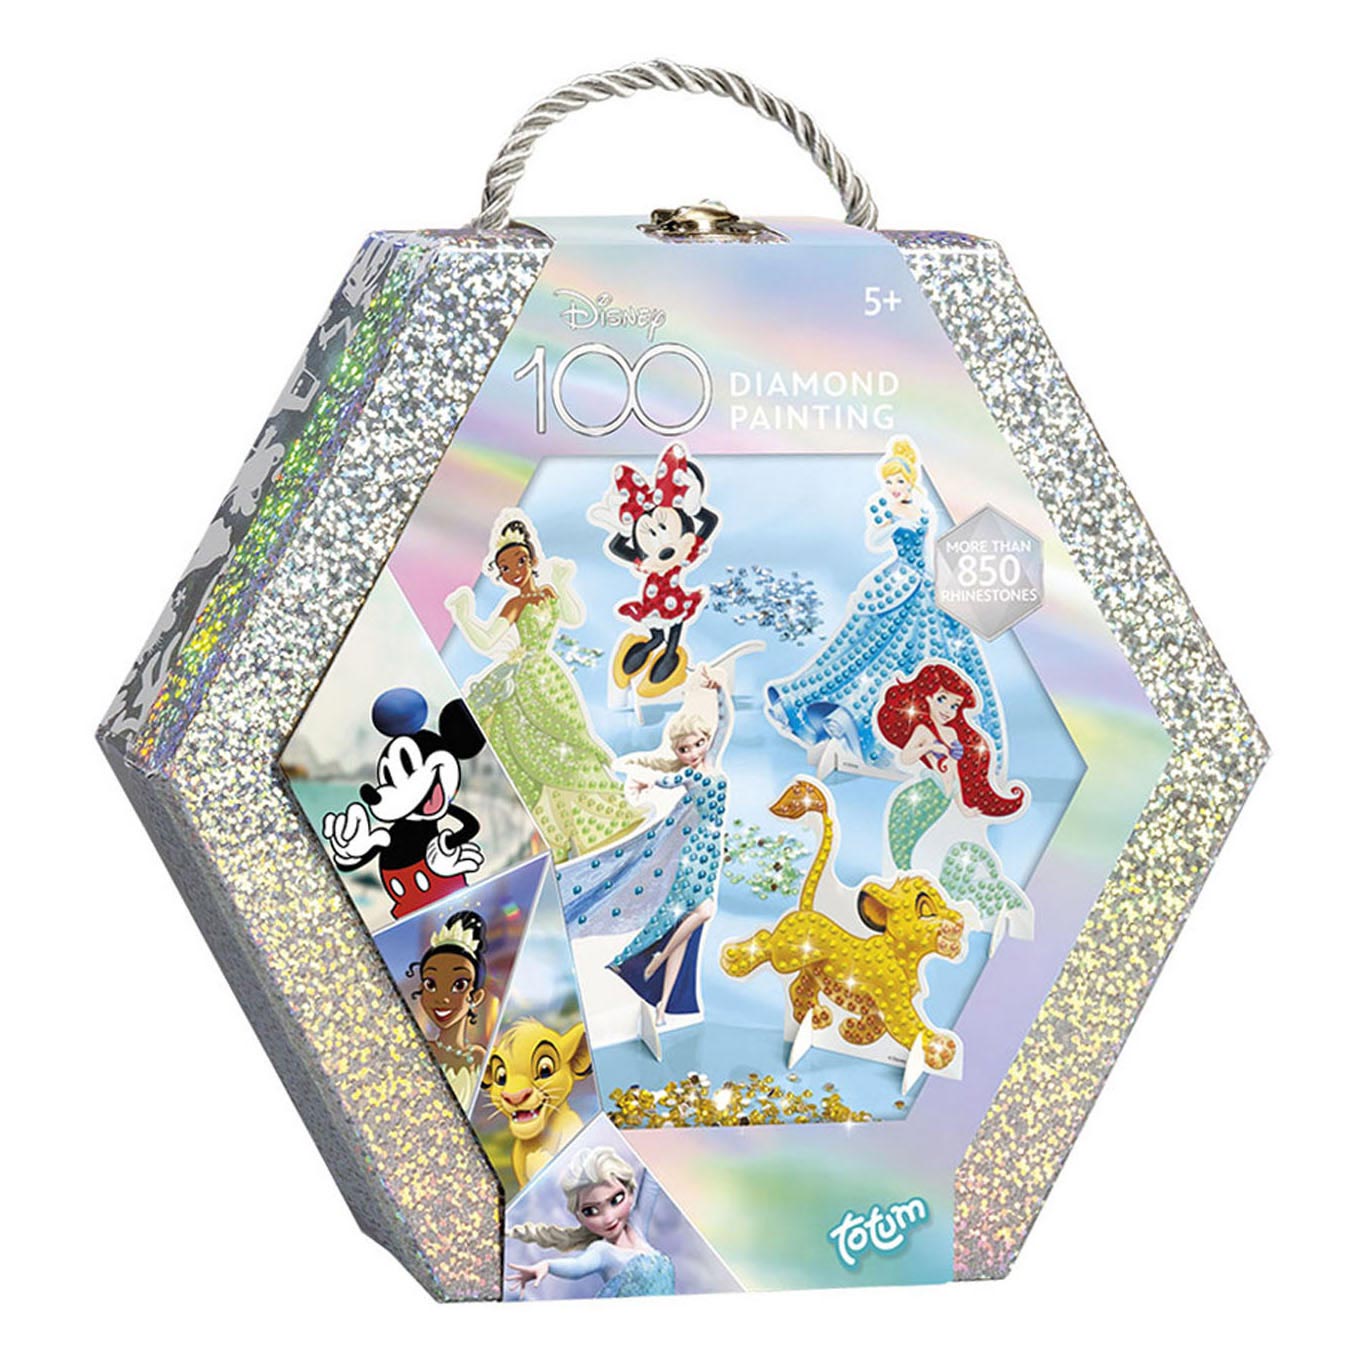 Totum Disney 100 – Diamantmalerei